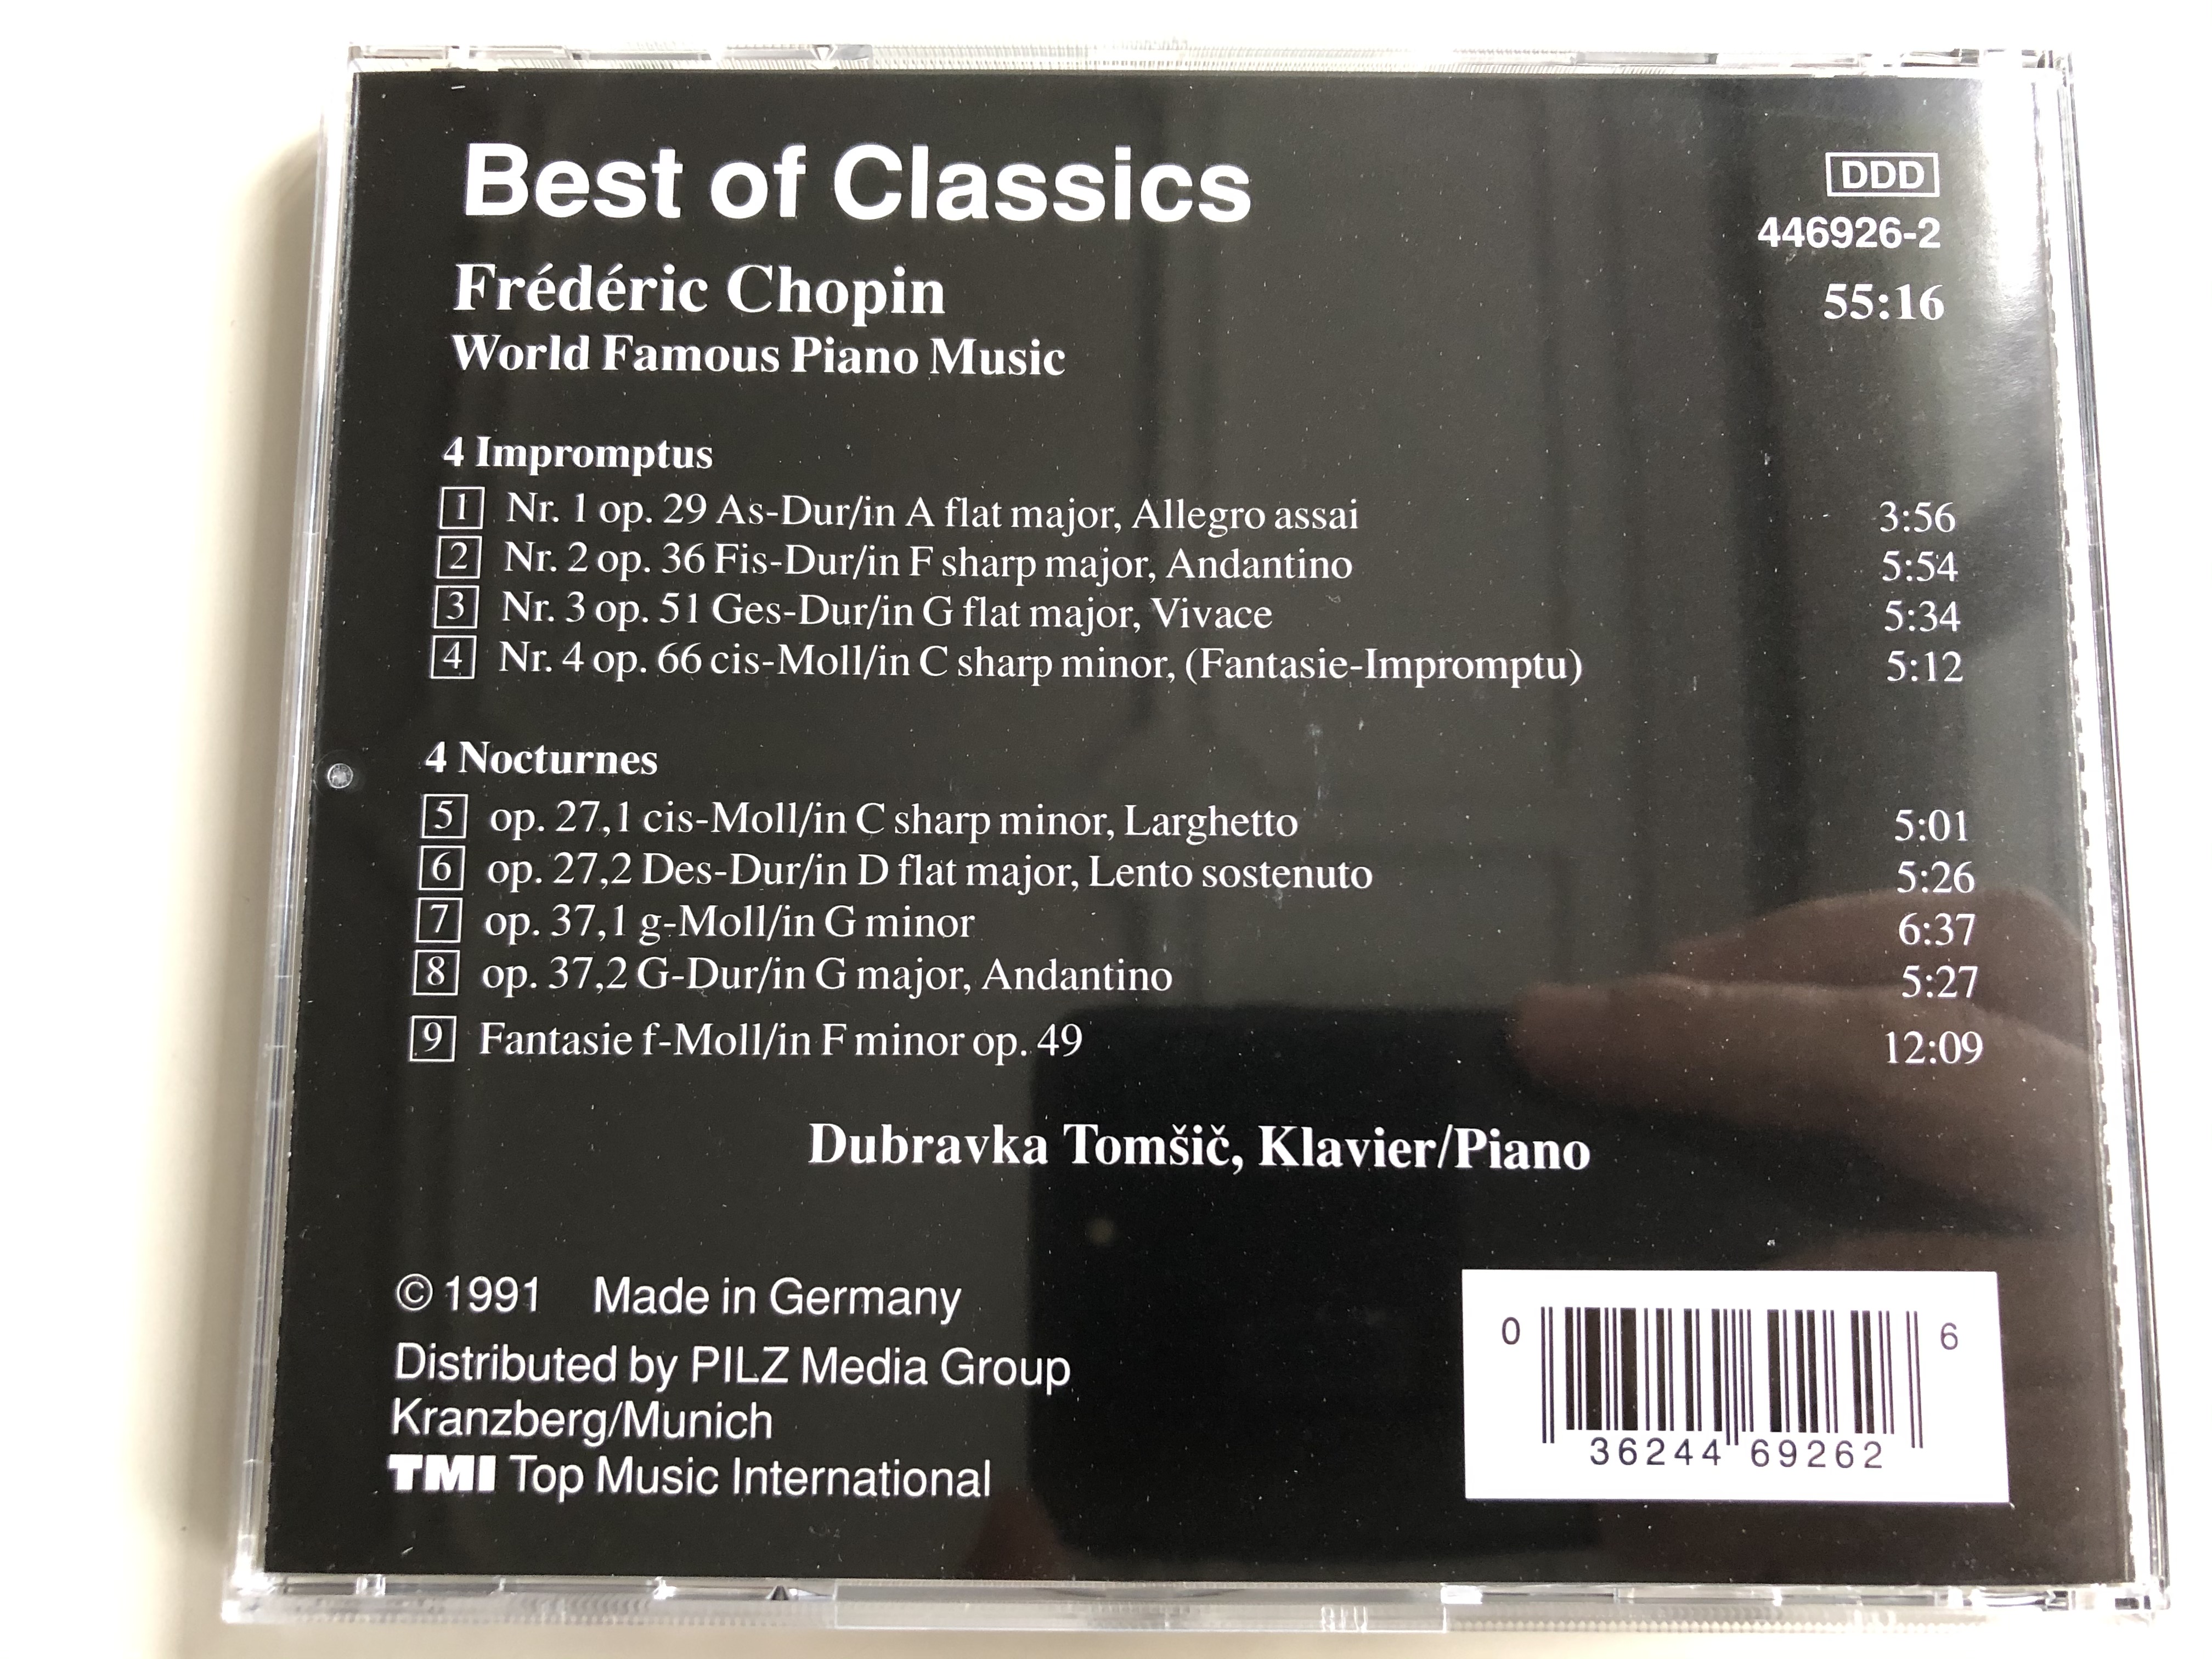 fr-d-ric-chopin-world-famous-piano-music-best-of-classics-pilz-audio-cd-1991-stereo-446926-2-3-.jpg